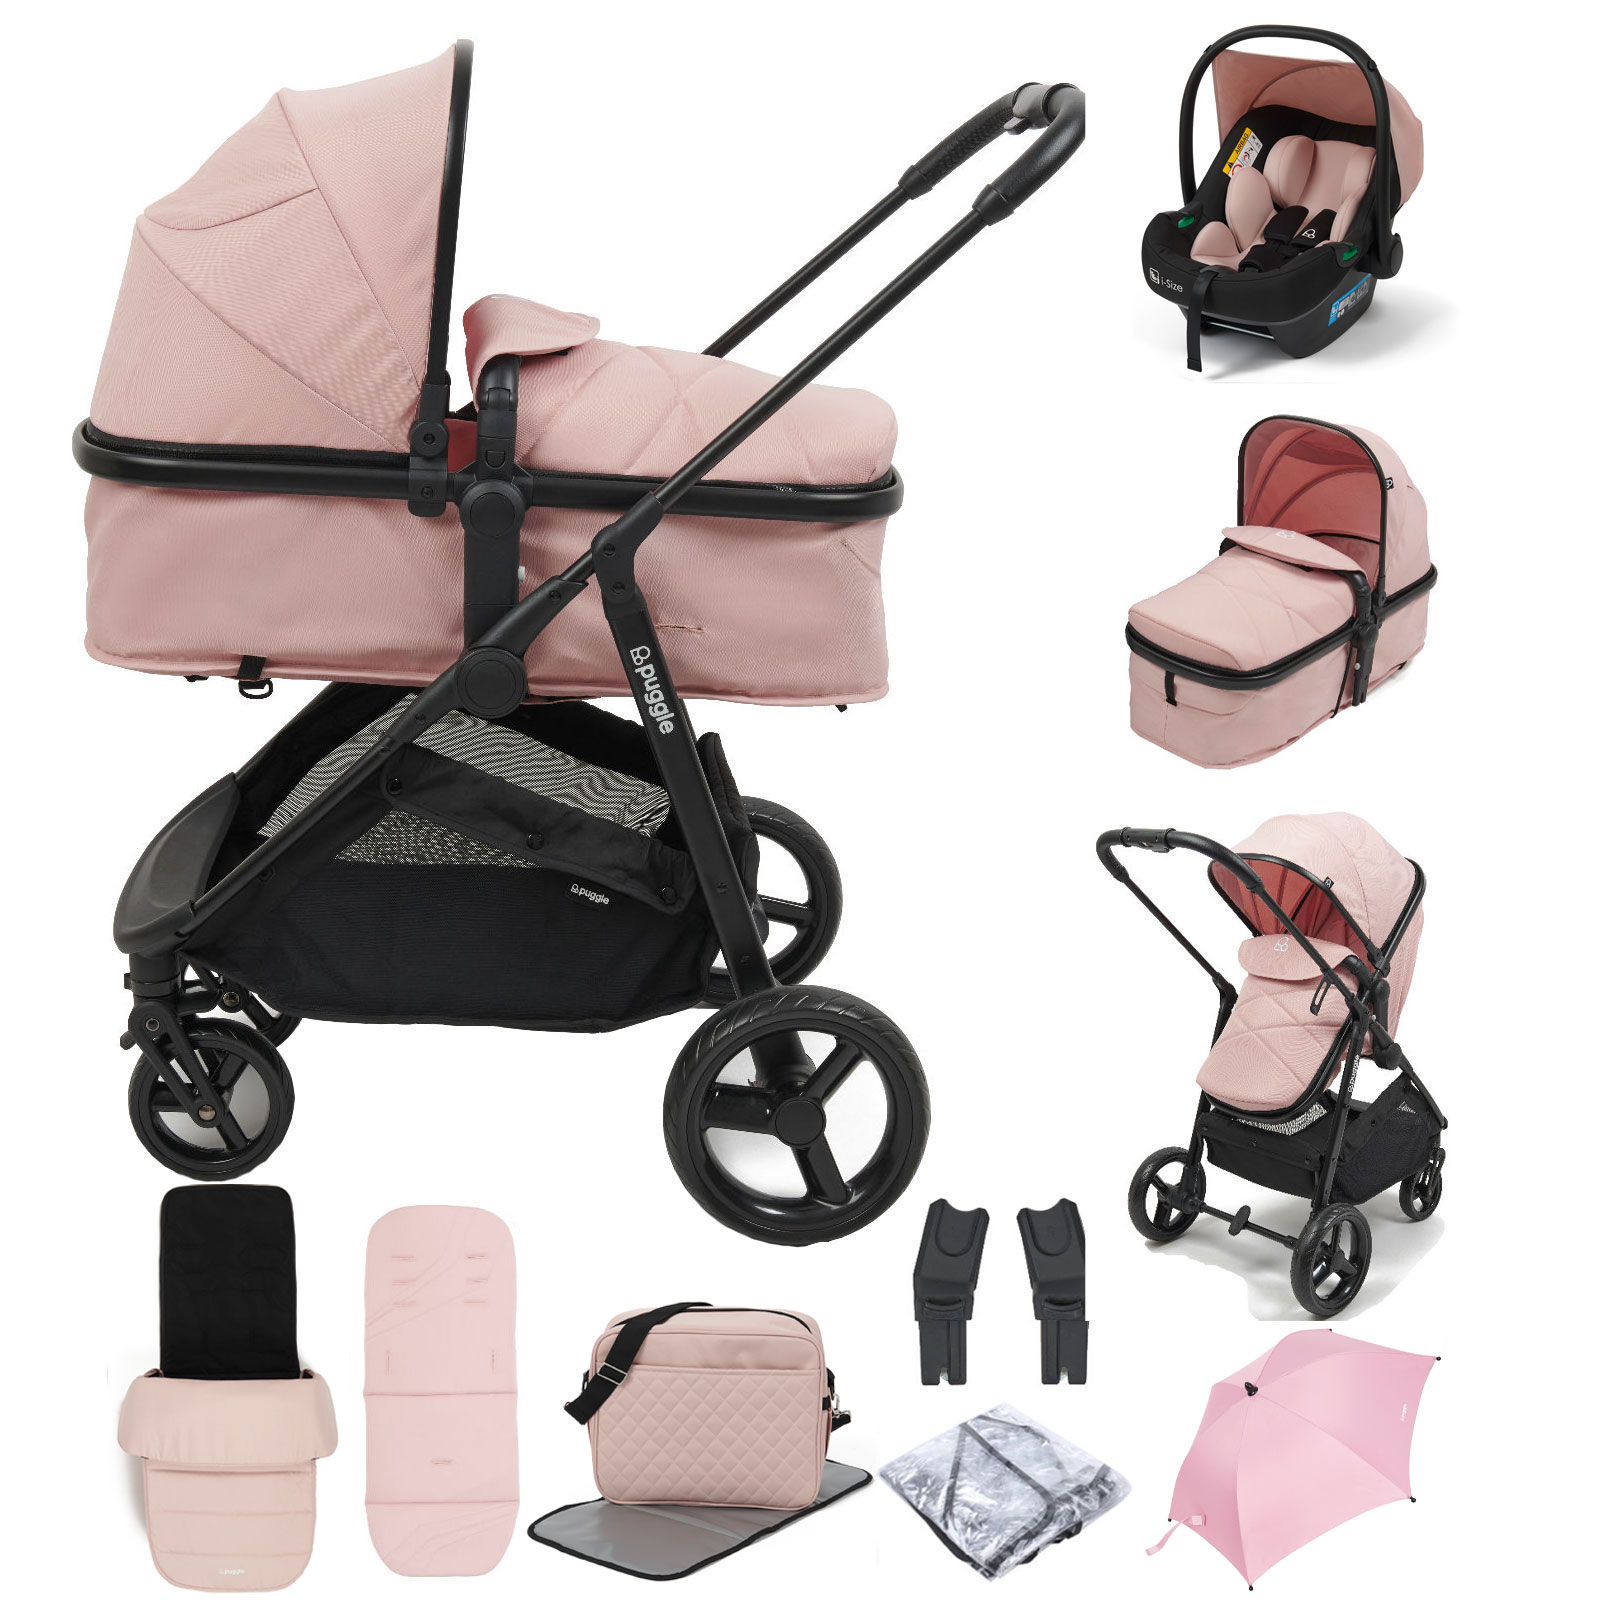 Puggle Monaco XT 2in1 i-Size Pram Pushchair Travel System with Footmuff, Changing Bag & Parasol - Blush Pink